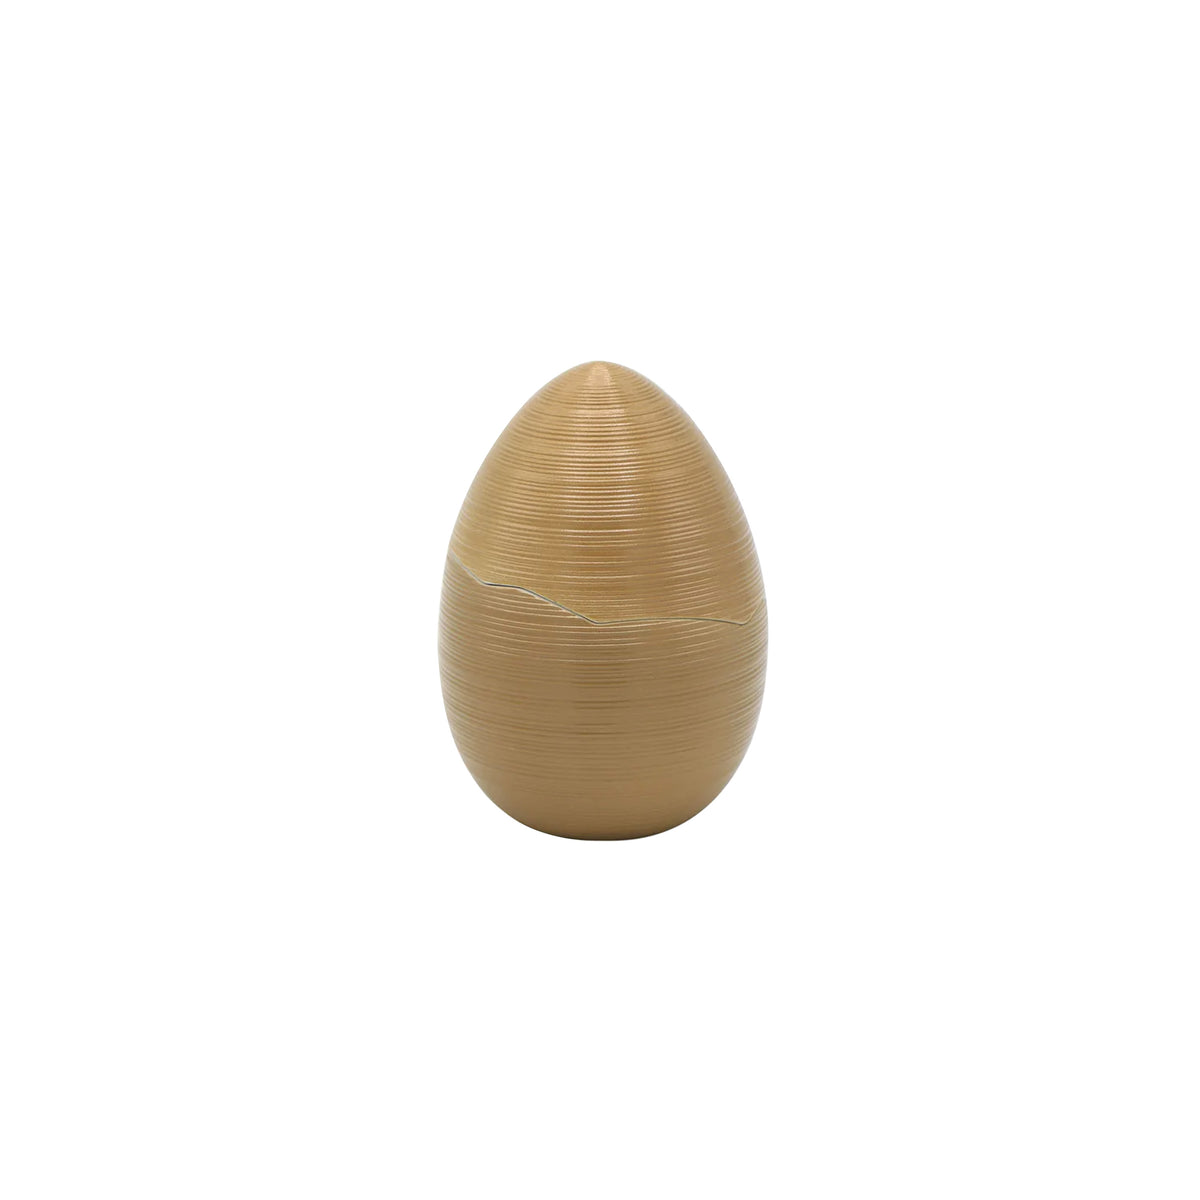 HEMISPHERE Copper - PM Egg